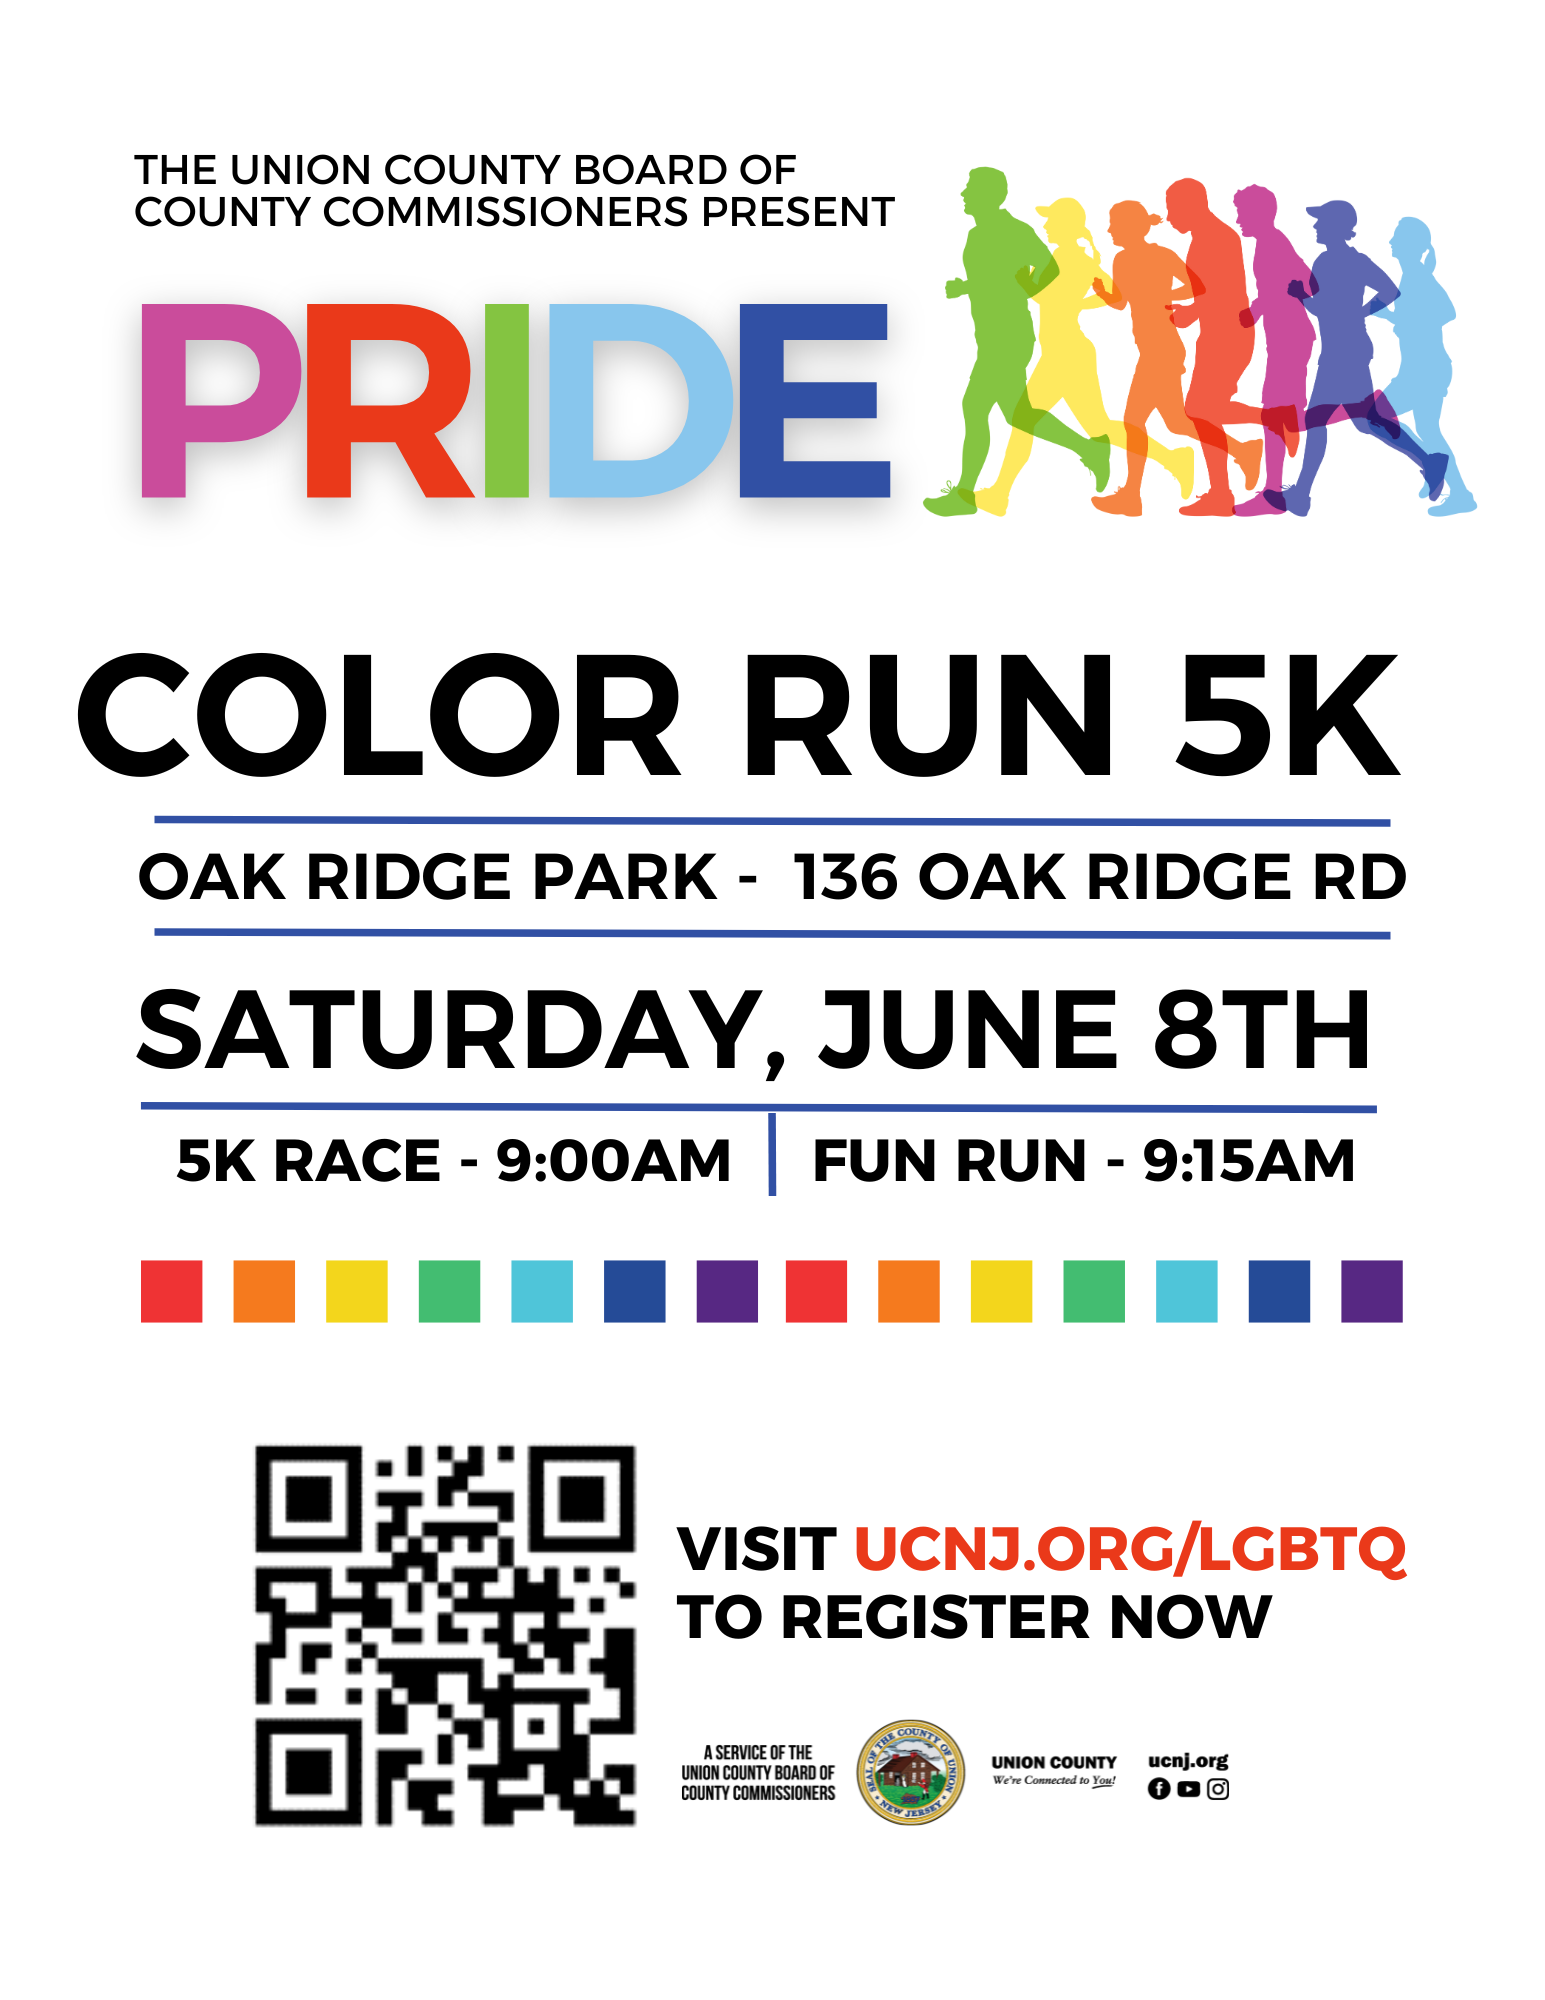 Union County Celebrates Pride Month with 5k and Fun Color Run on Saturday, June 8th